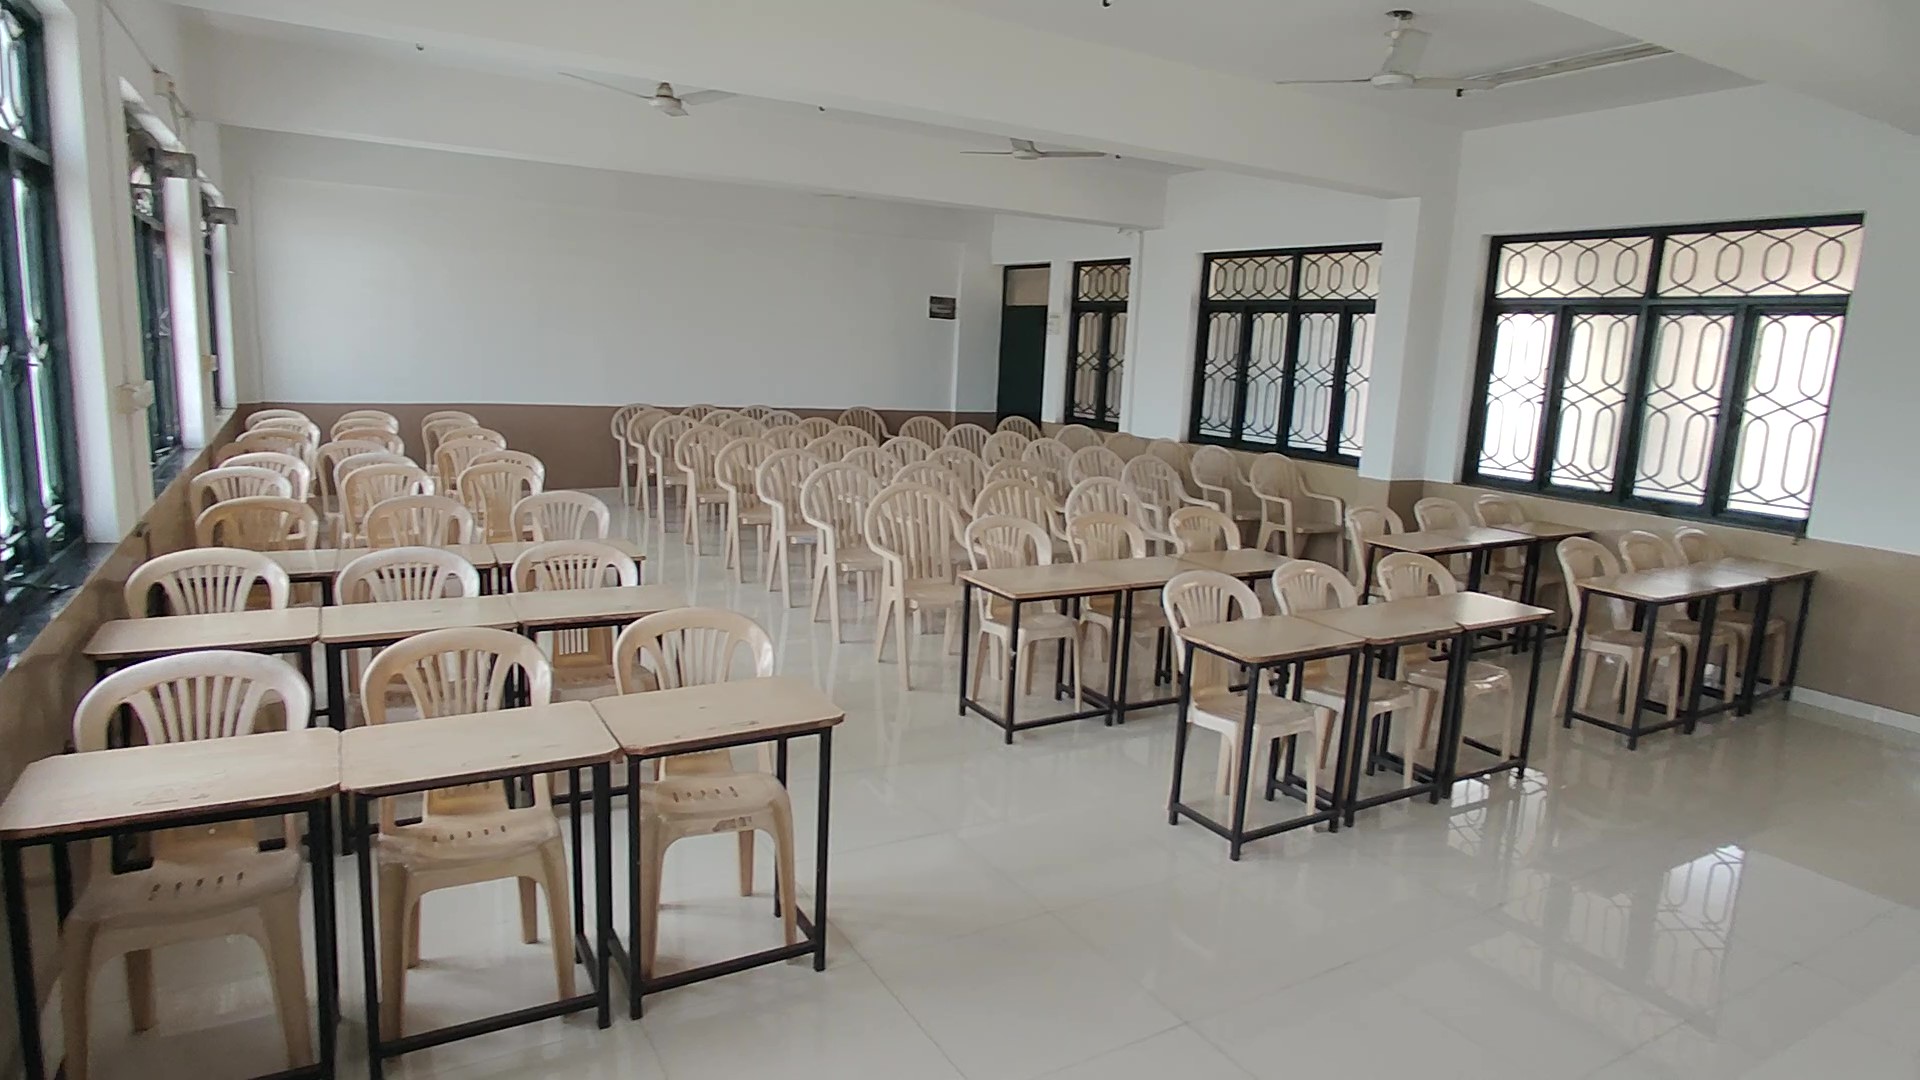 Seminar hall